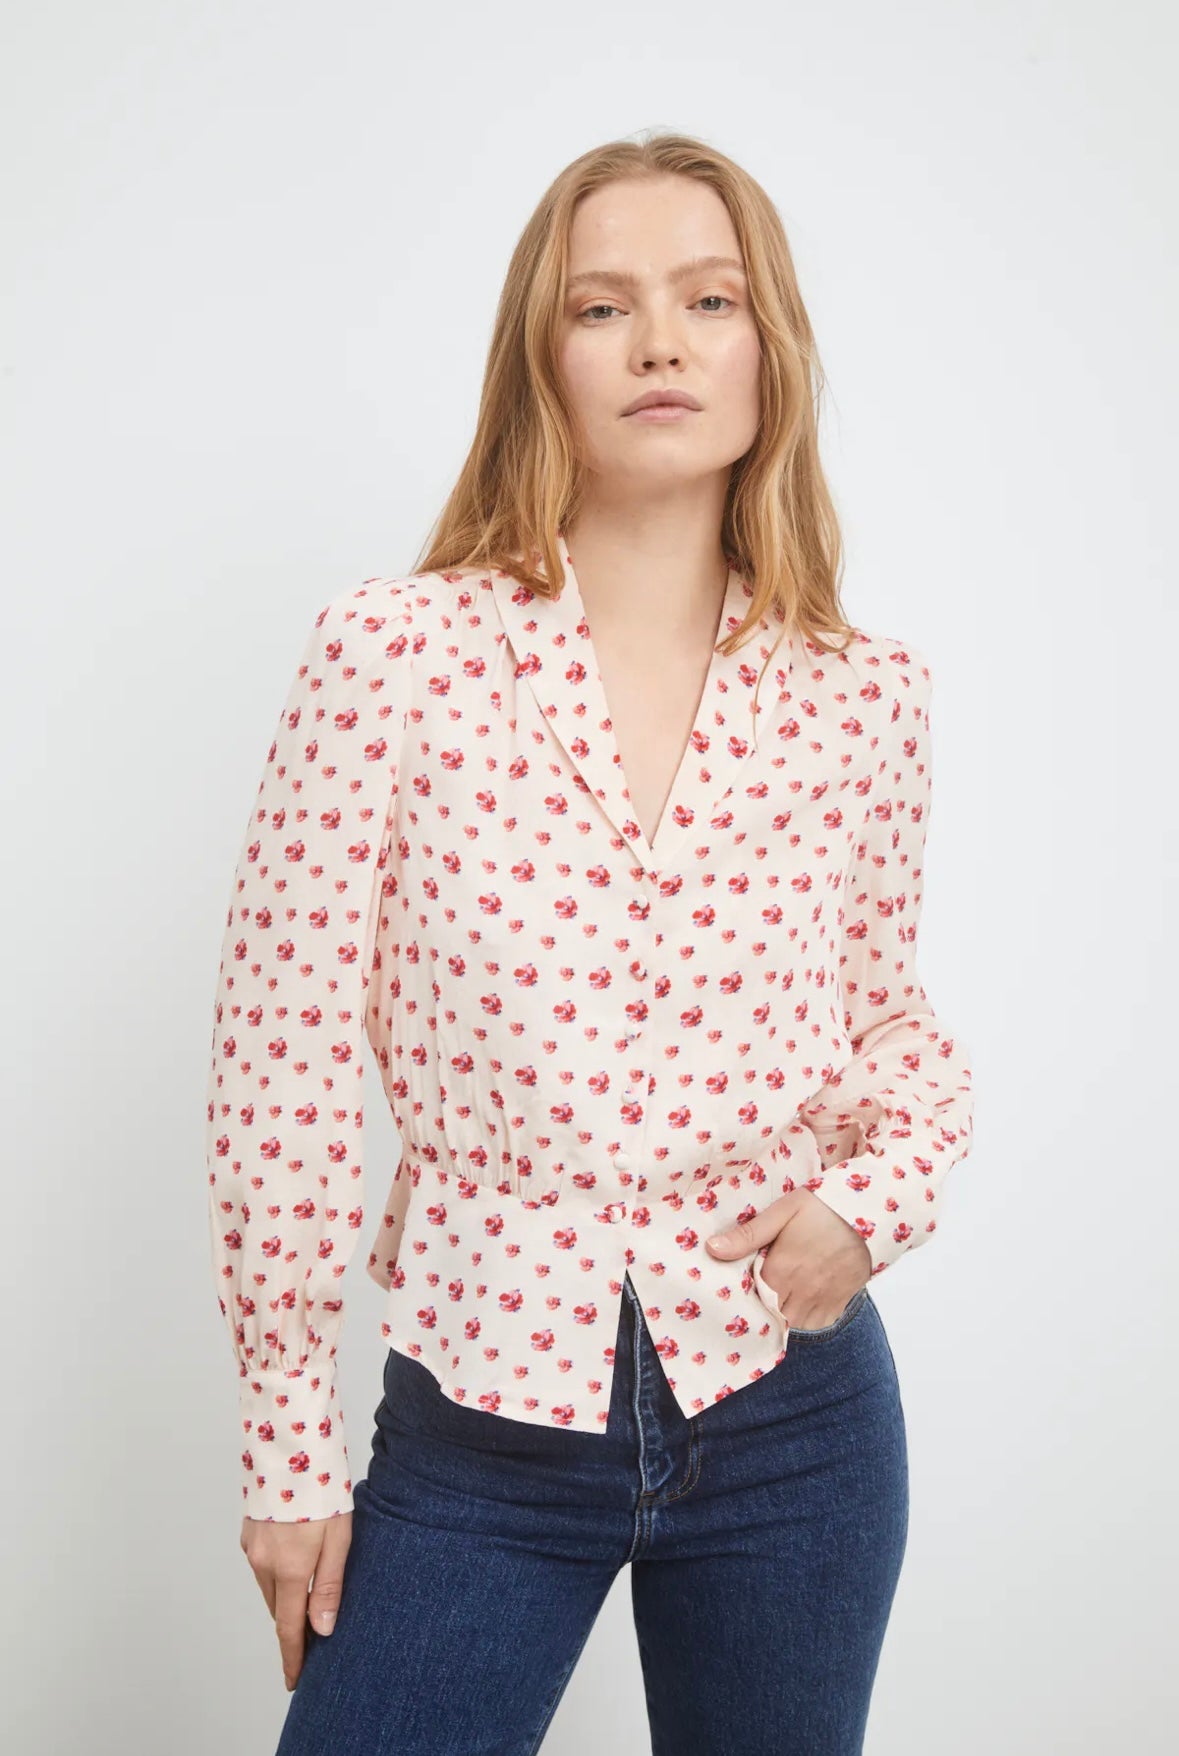 Camilla Pihl Papil blouse - Pink Berry Print